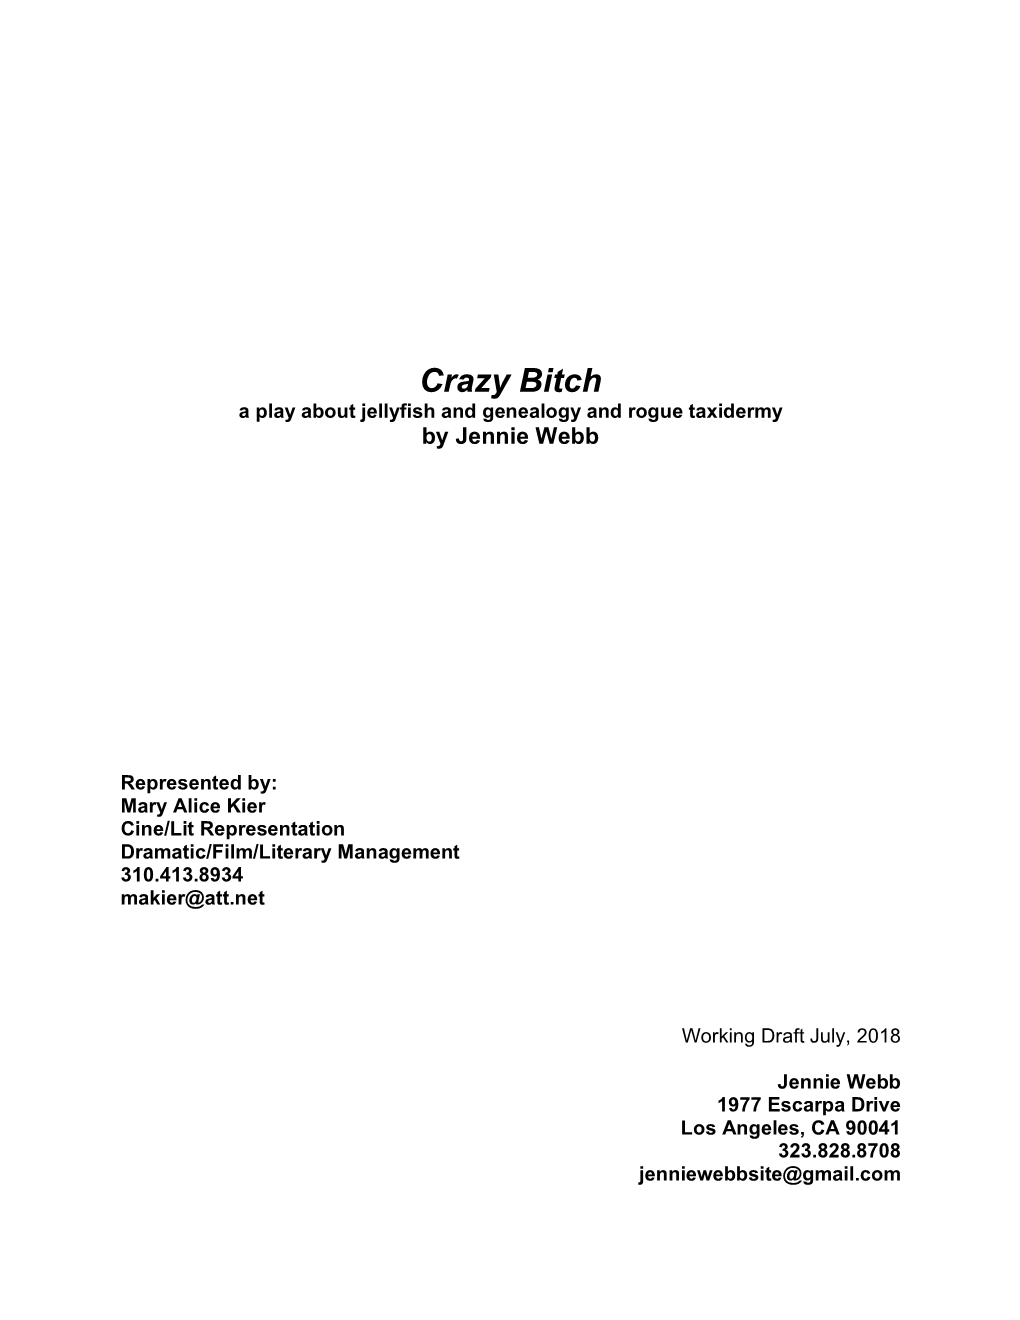 Crazy Bitch 2018 Working Draft